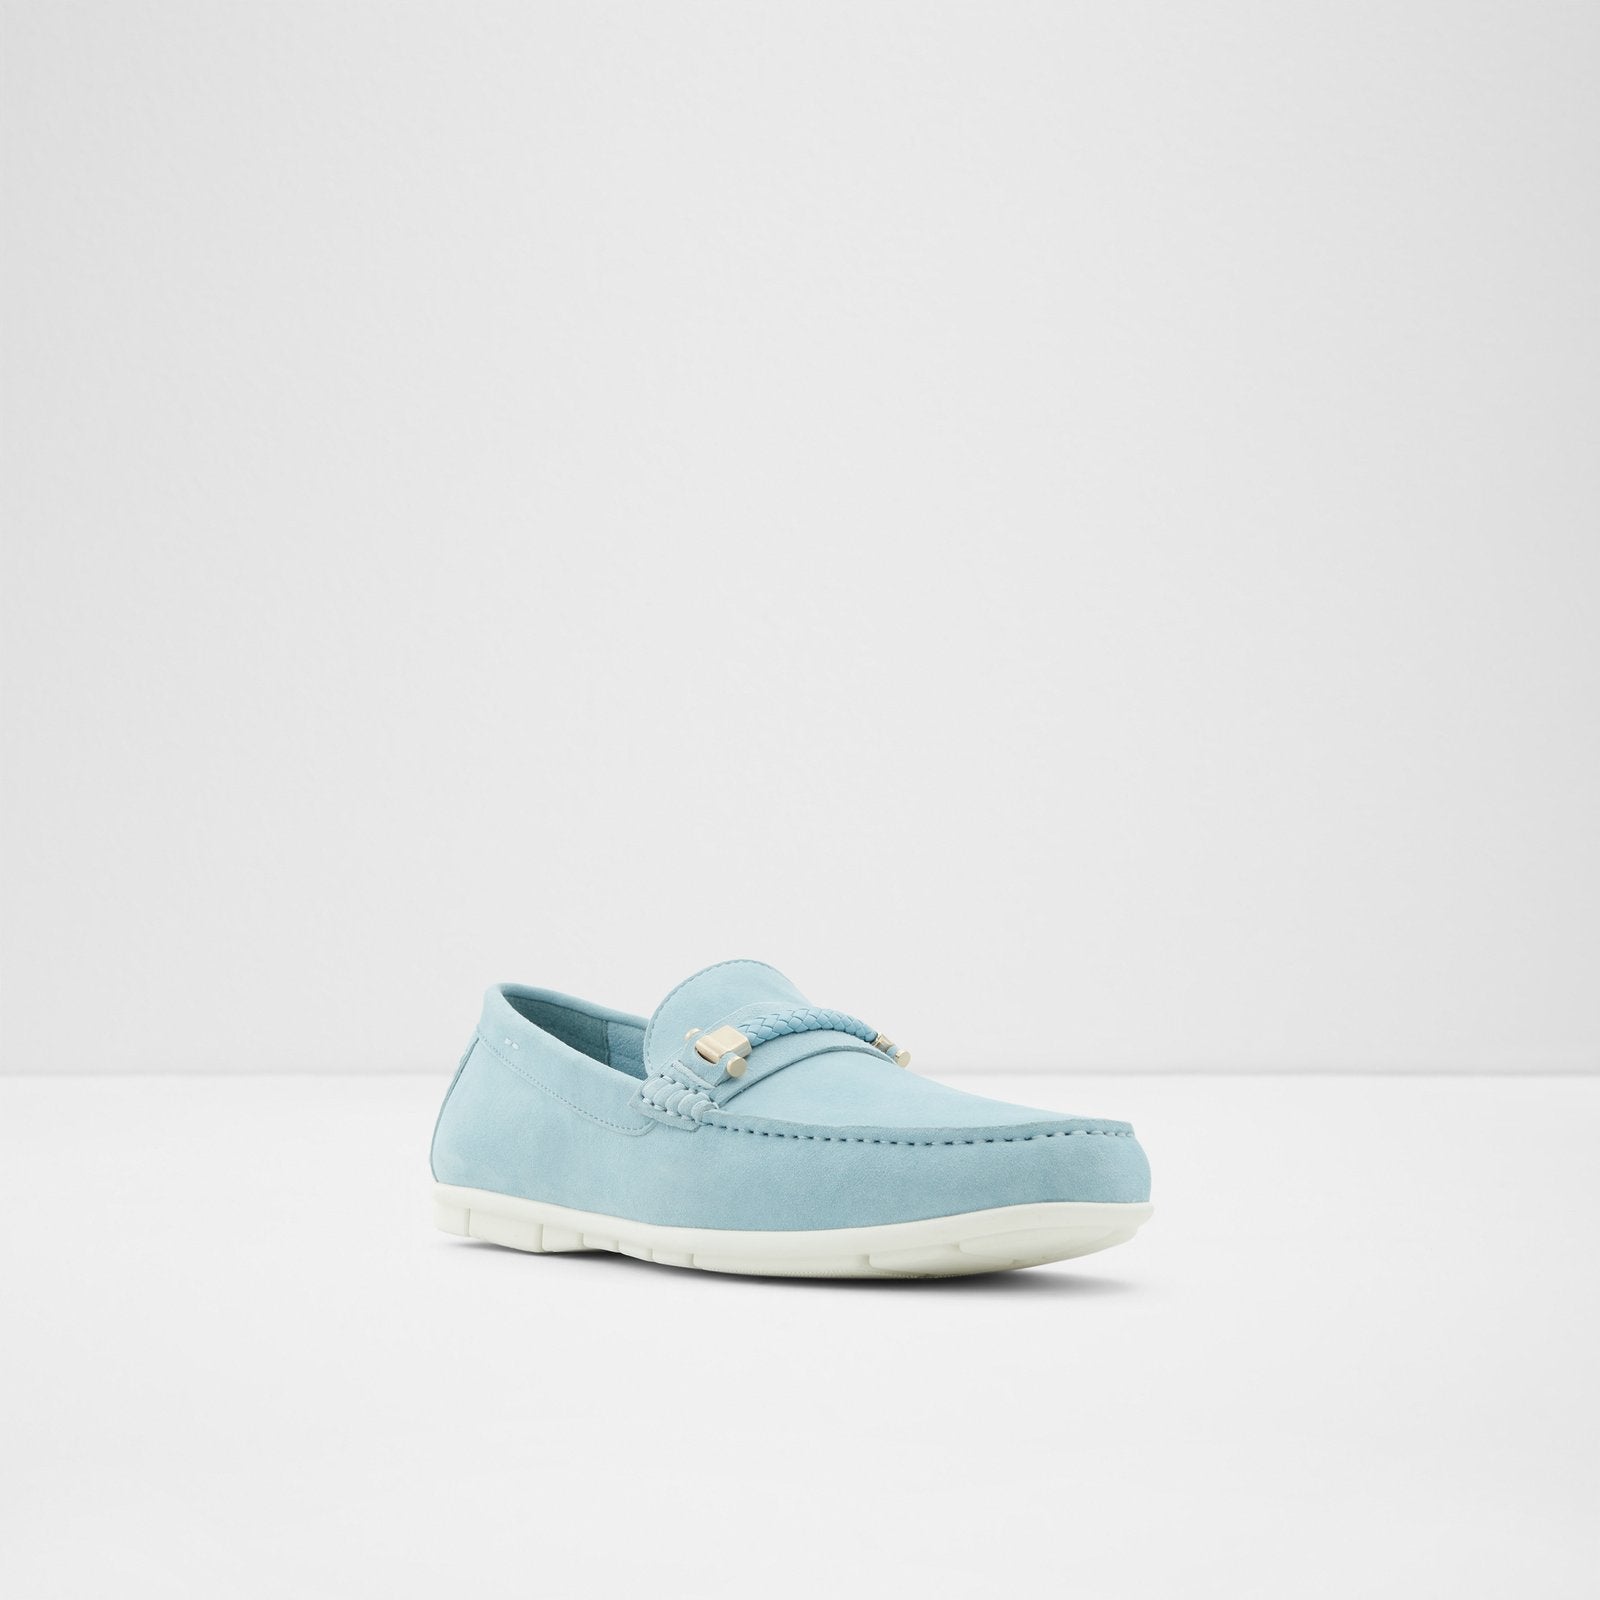 Zirnuflex Men Shoes - Blue - ALDO KSA